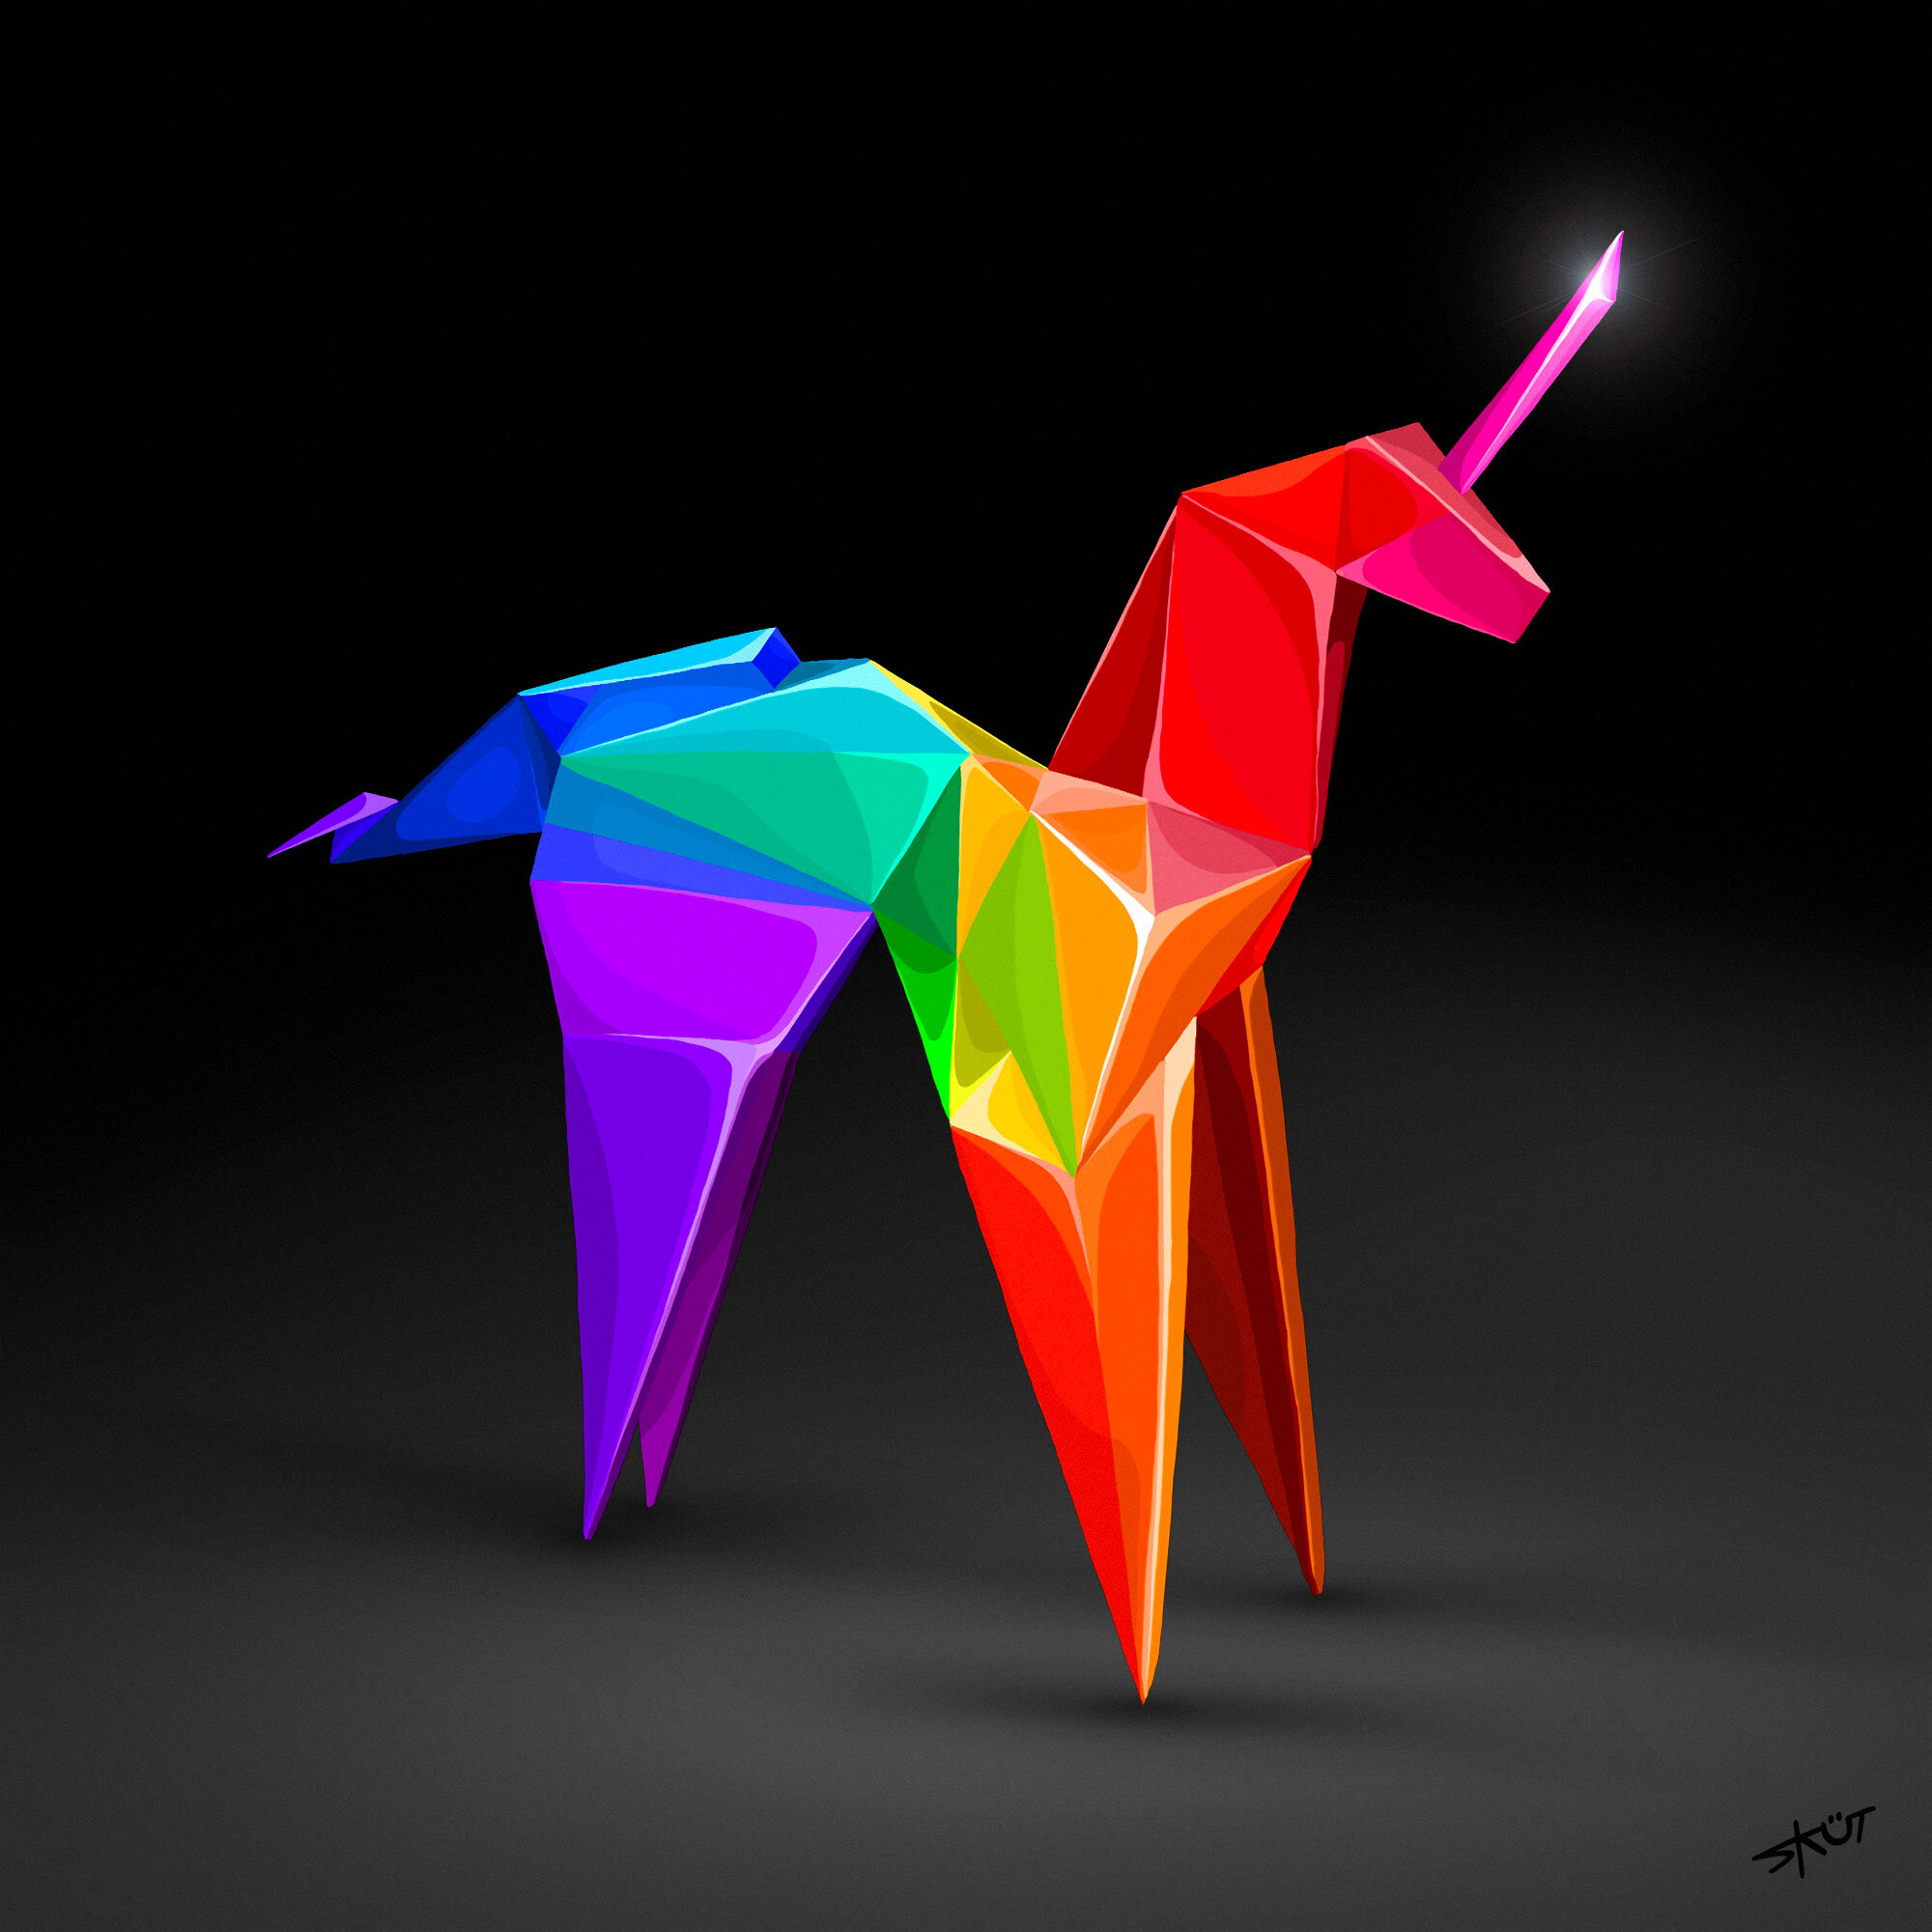 Saatchi--SKUT-Unicorn-Origami.jpg